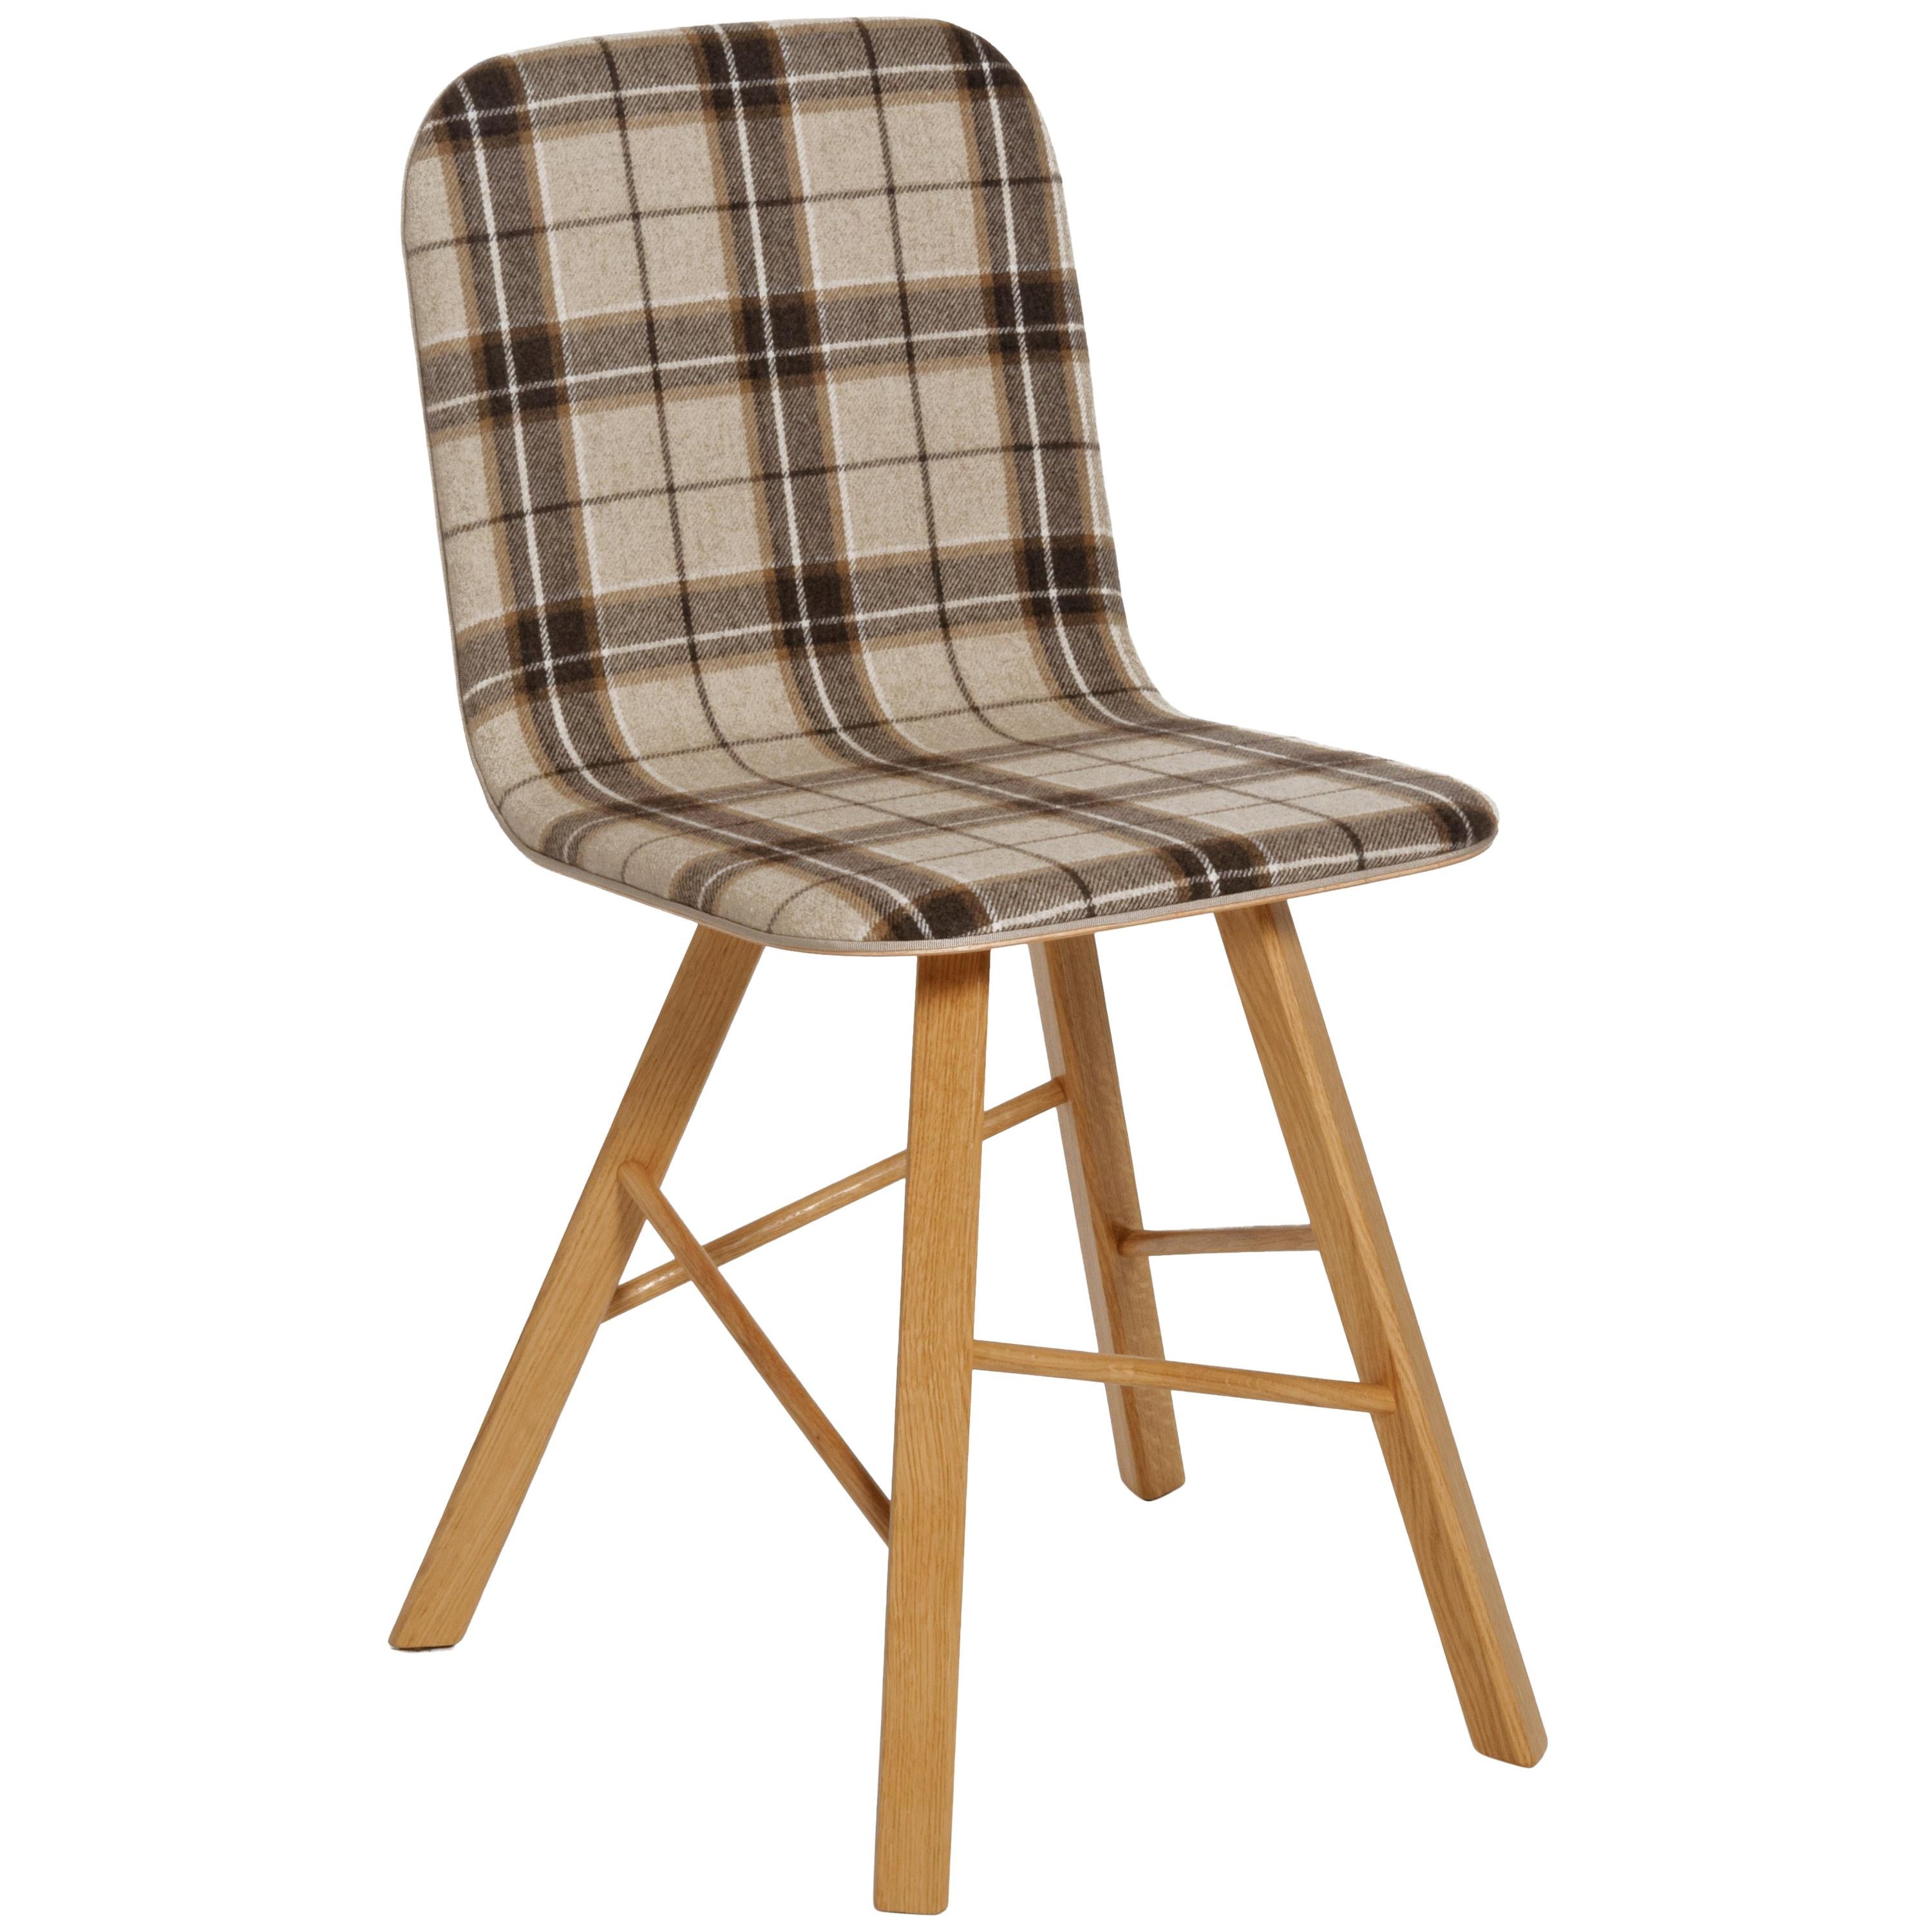 Tria Simple Chair by Colé Oak legs, Beige Tartan Seat , Minimalist Made in italy